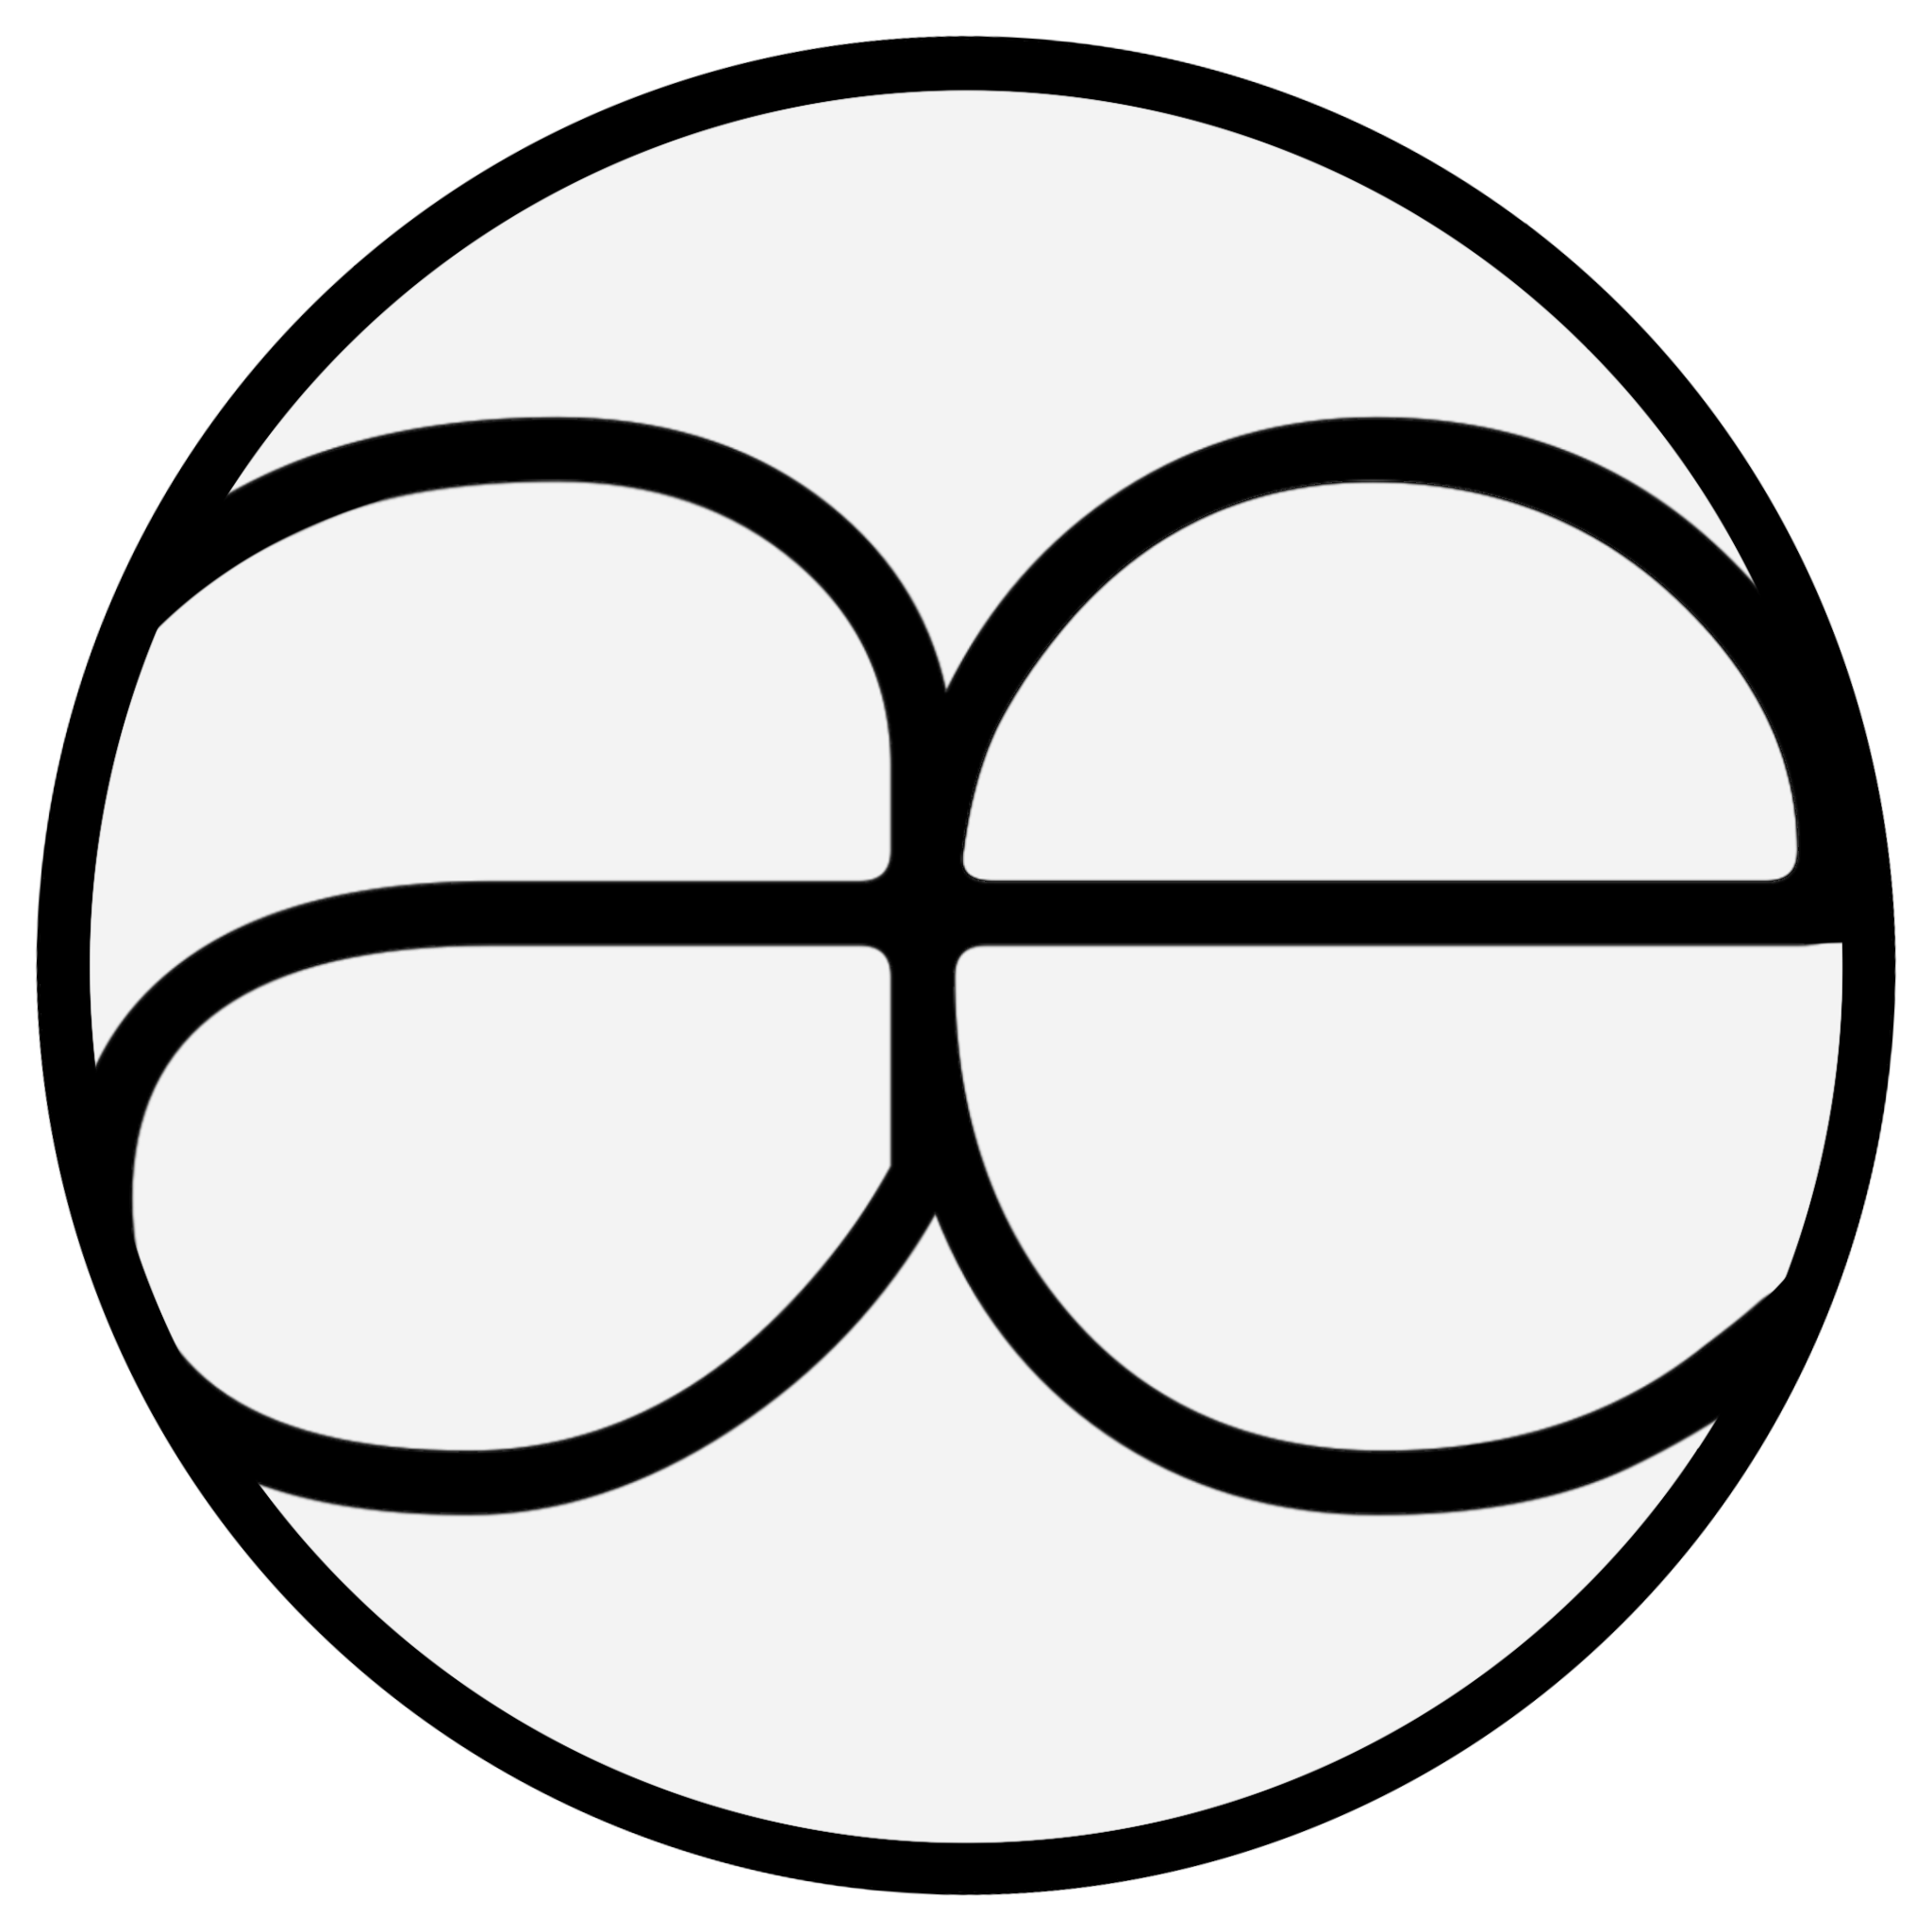 Arkæolgi æ logo in circle. Black text on white background.